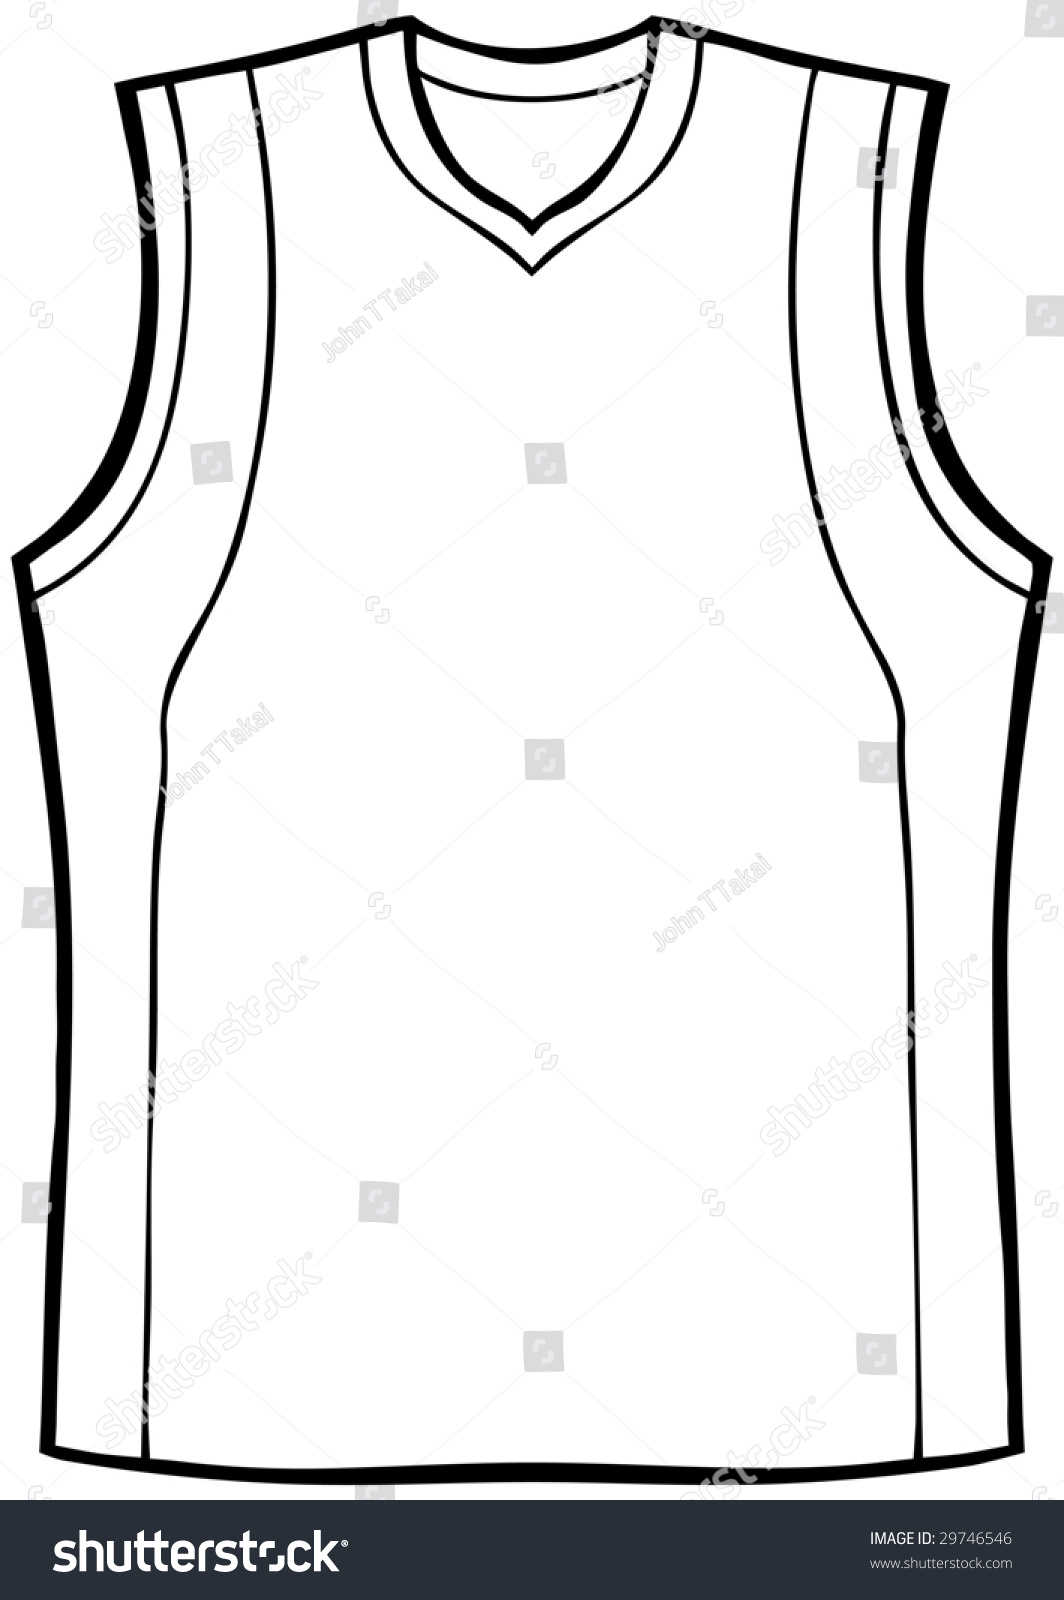 Basketball Jersey Stock Illustration 29746546 - Shutterstock